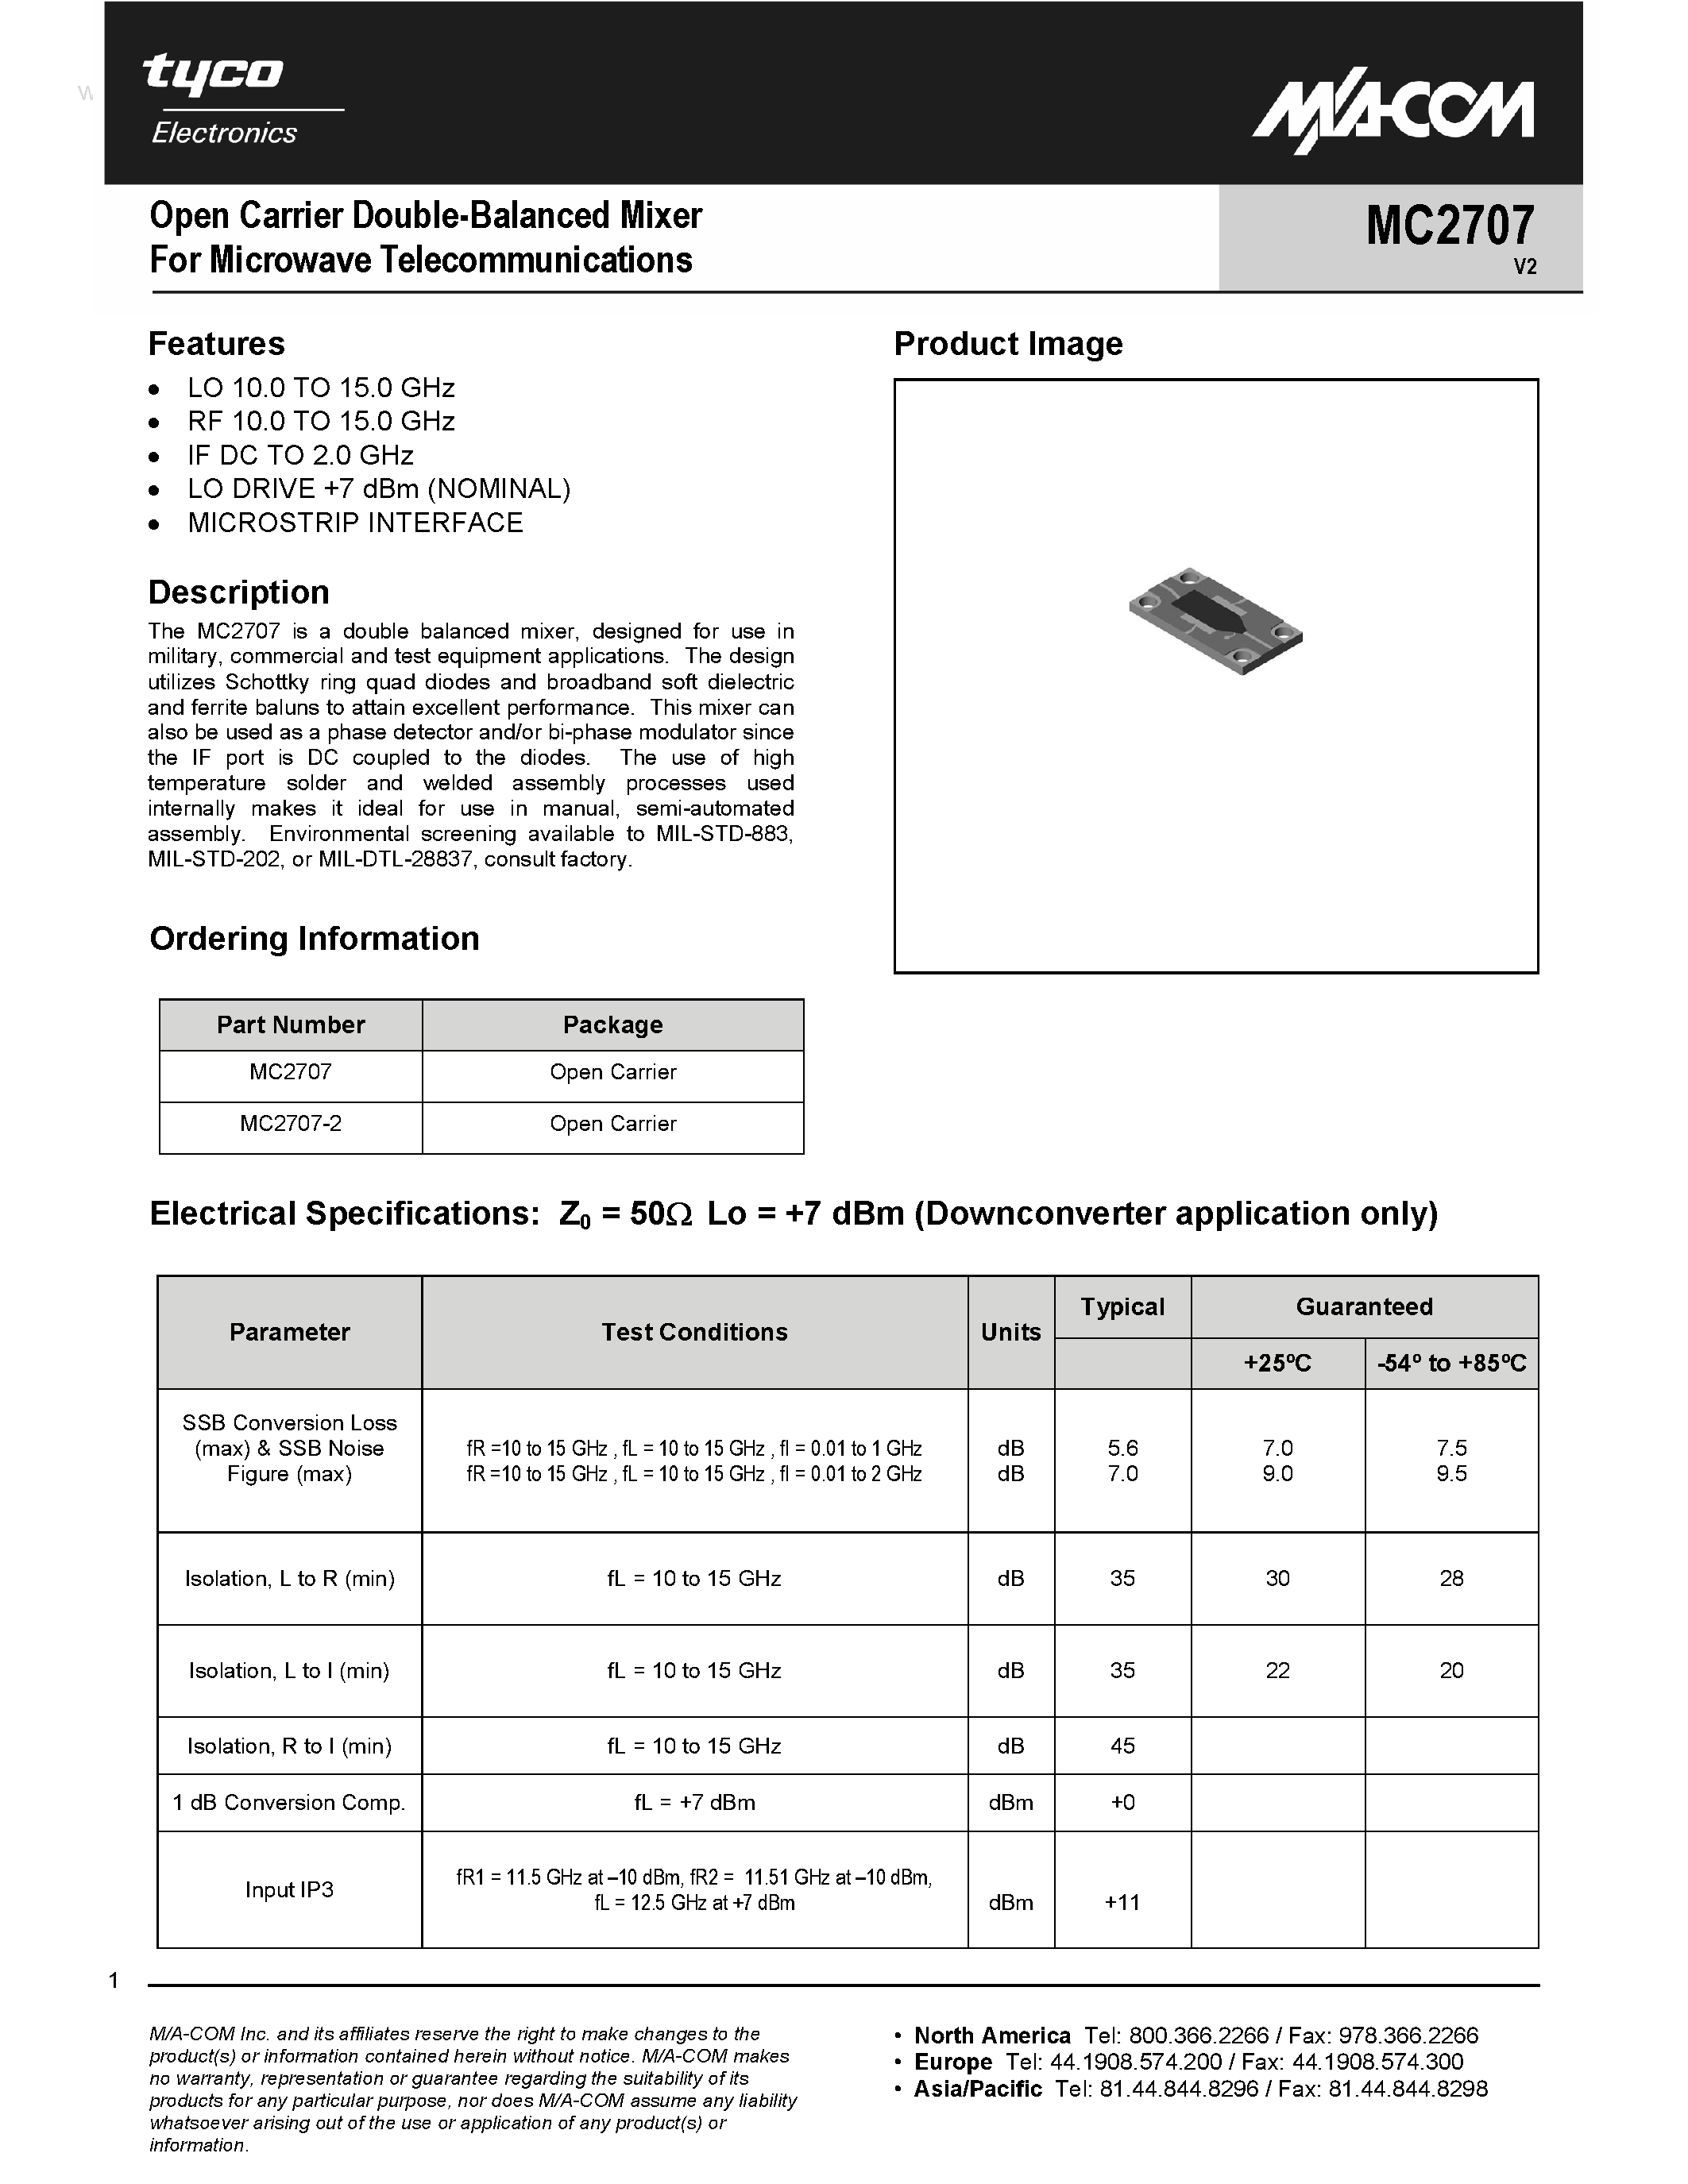 Datasheet MC2707 - Open Carrier Double-Balanced Mixer page 1